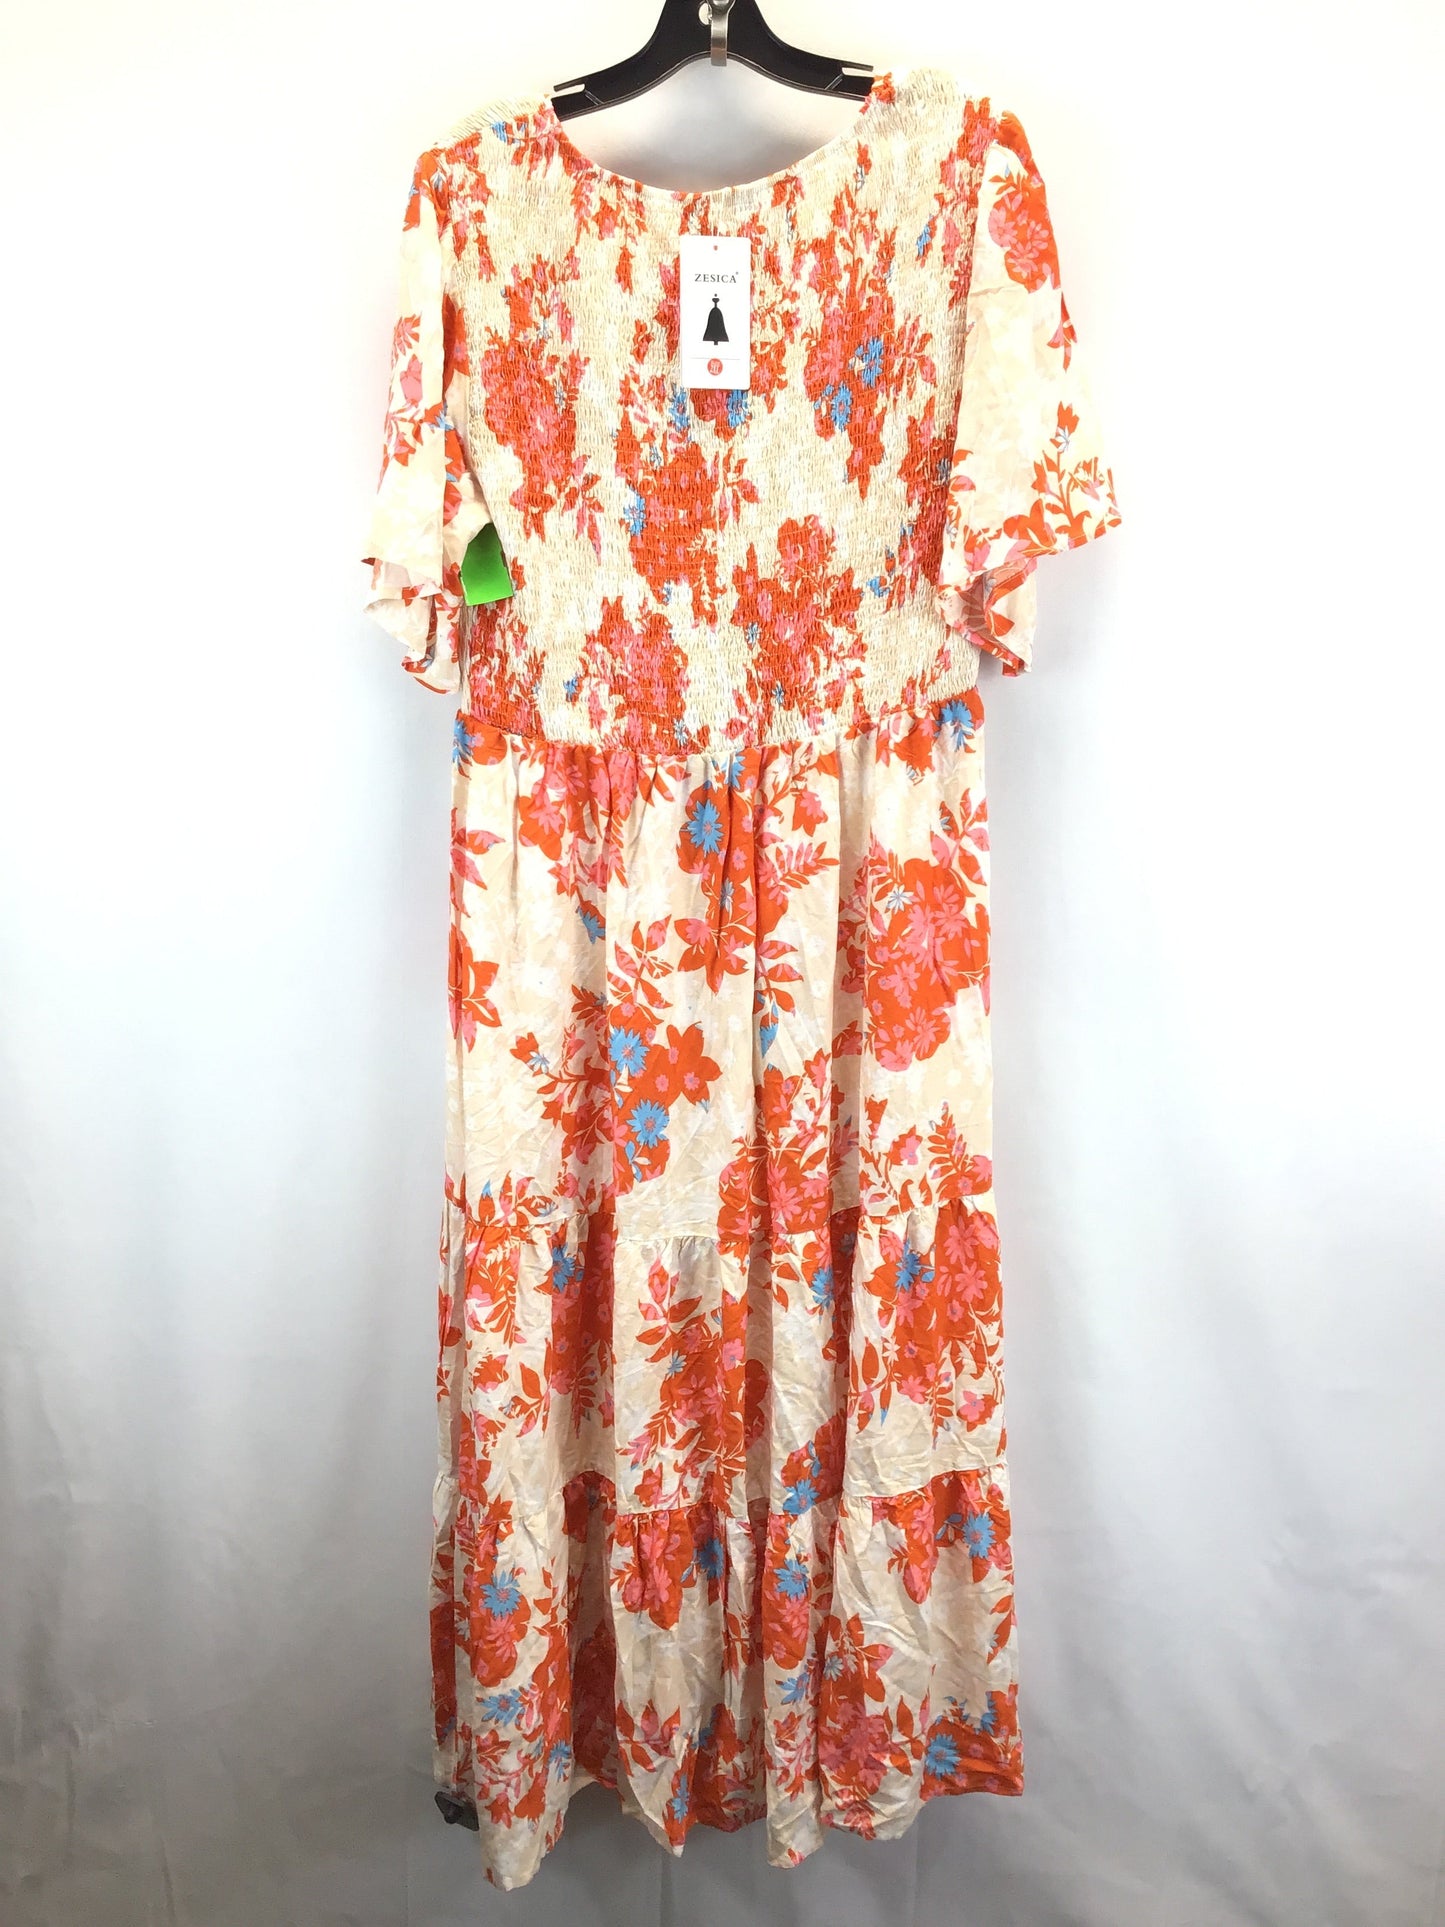 Floral Print Dress Casual Maxi Clothes Mentor, Size 2x